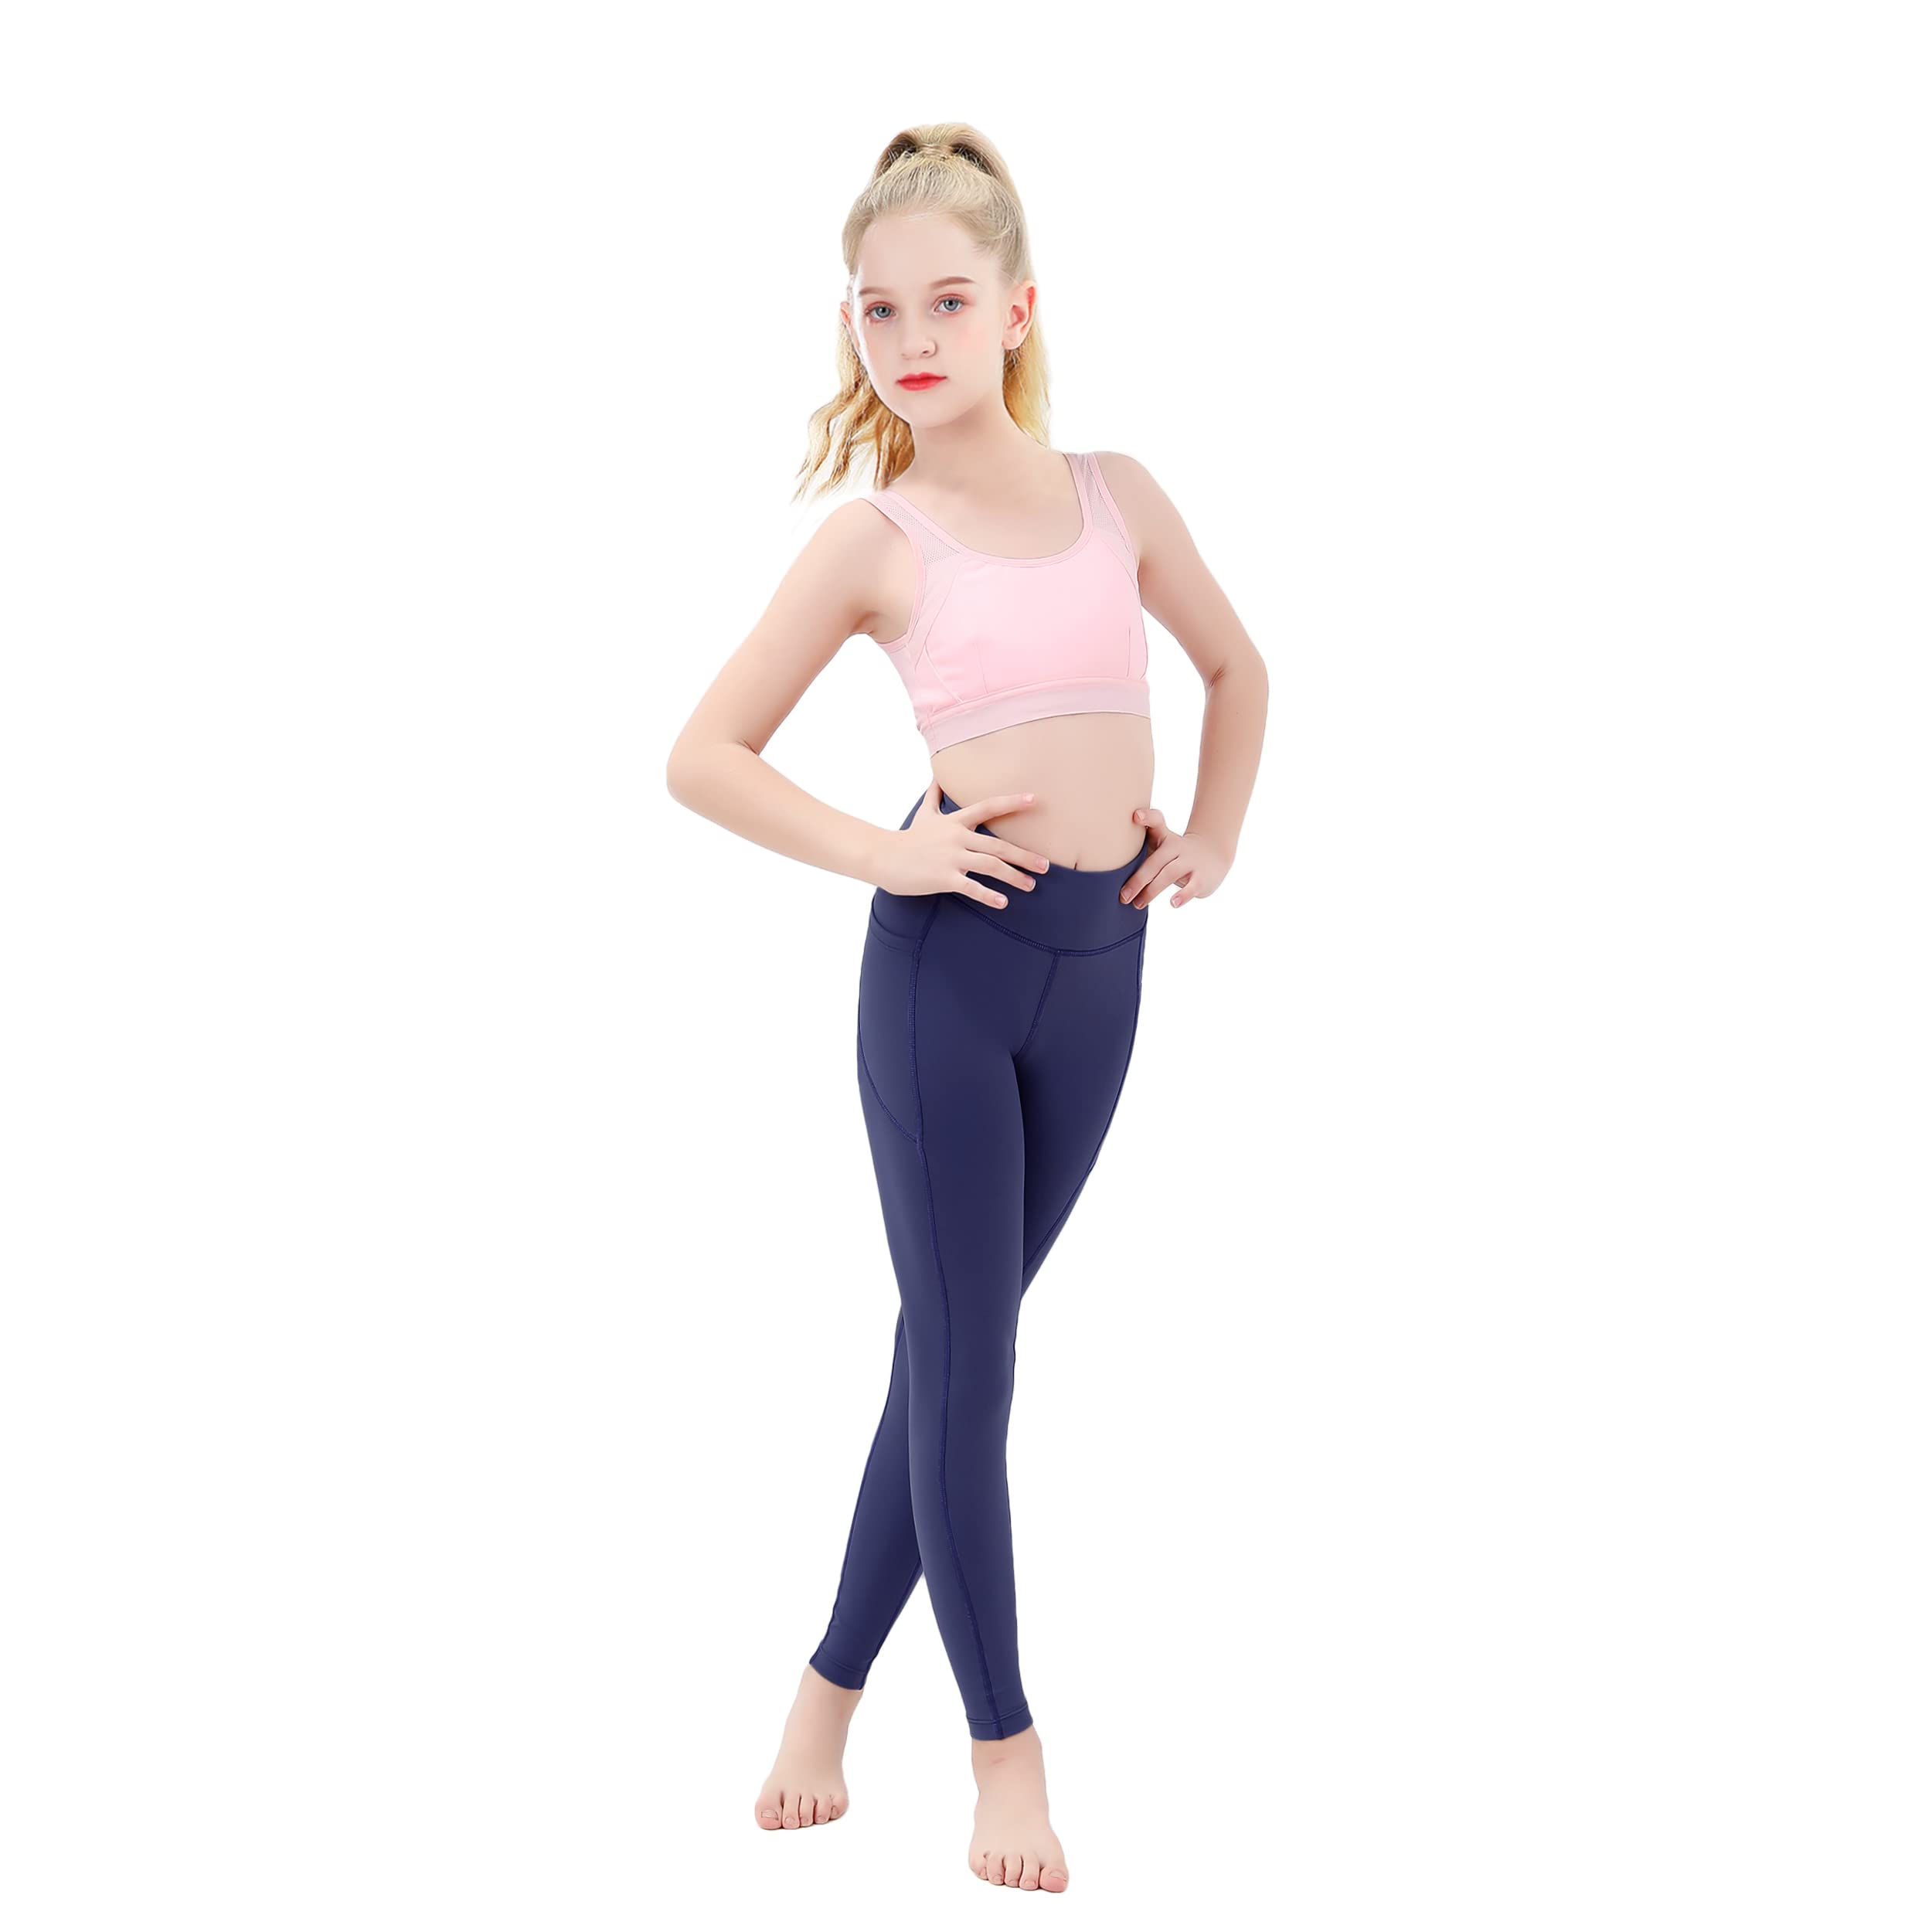 JWM Girls Athletic Leggings - Kids Yoga Dance Compression Pants Teen  Running Workout Sport Tights Leggins with Pockets Navy